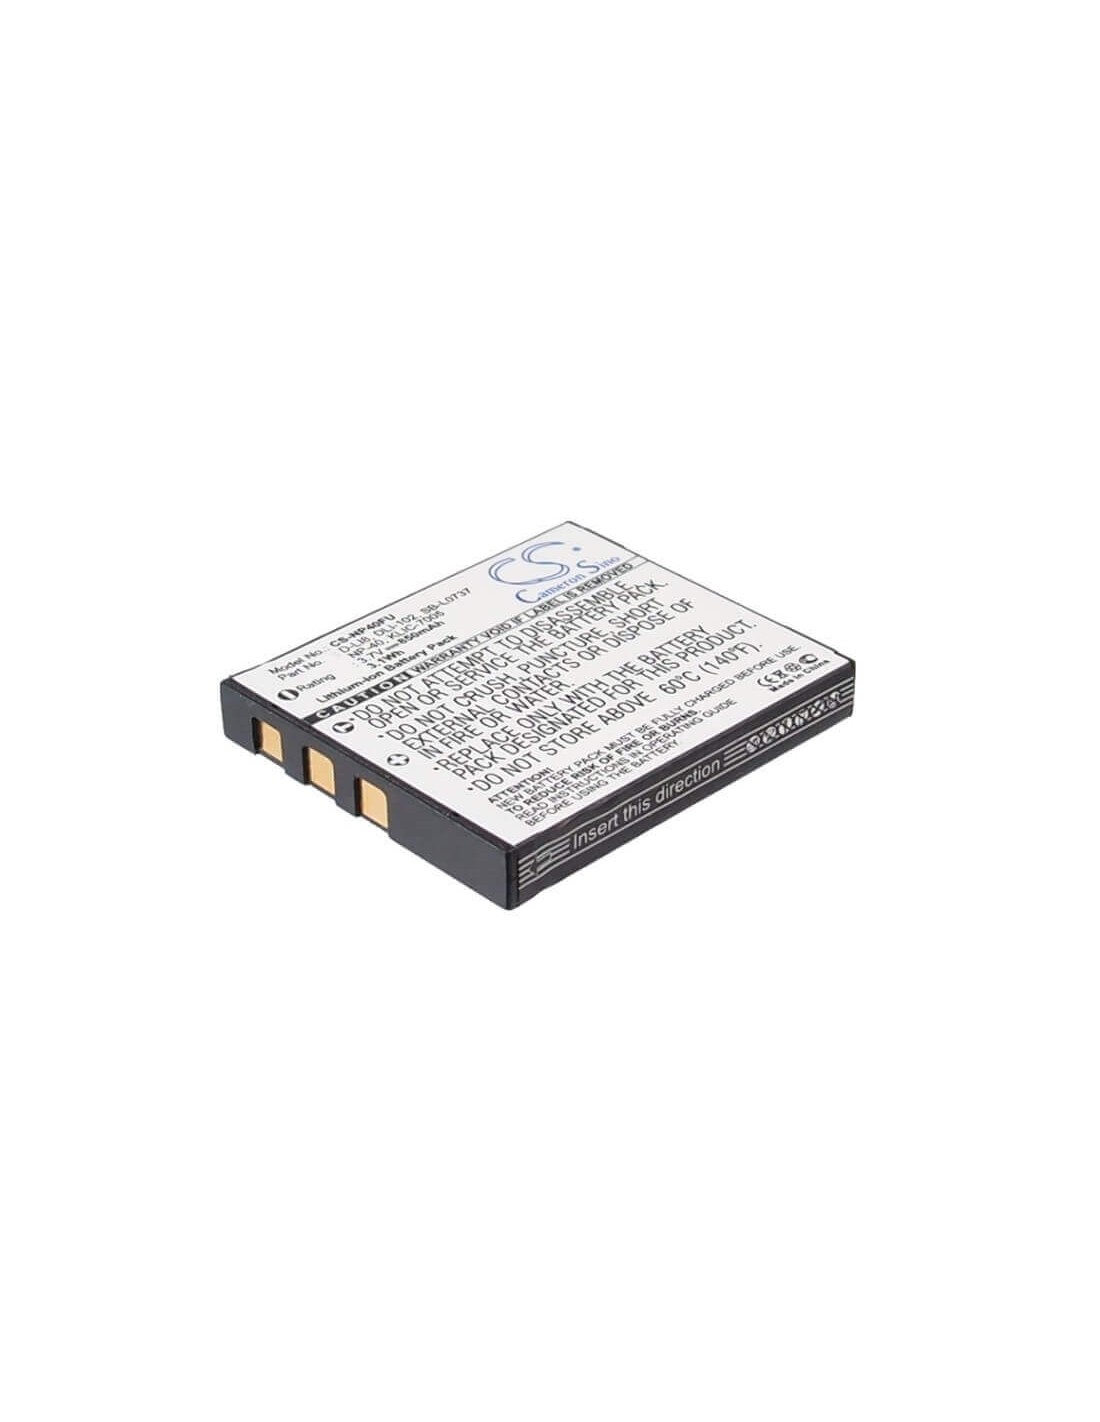 Battery for Svp Cdc-650, Cdc-8640, Hddv-2880, Hddv-t200, 3.7V, 850mAh - 3.15Wh